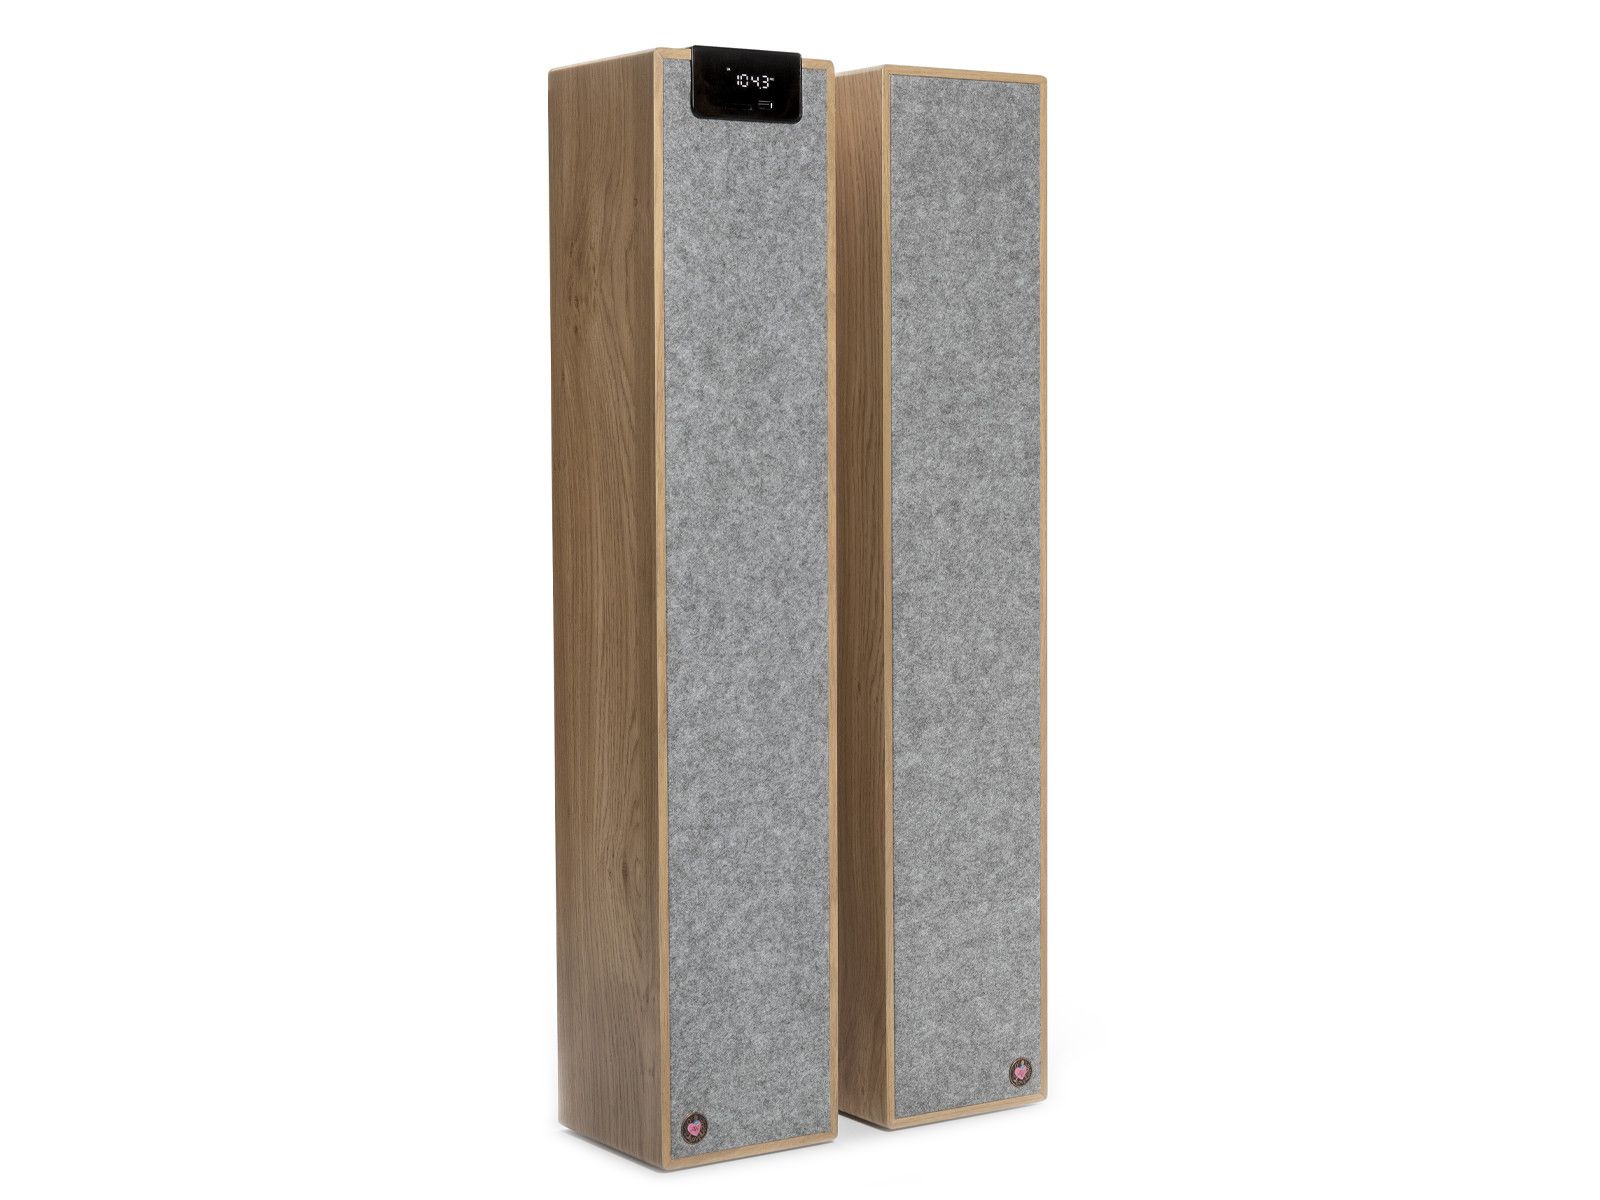 avlove-hifi-twin-tower-2-delige-speakerset